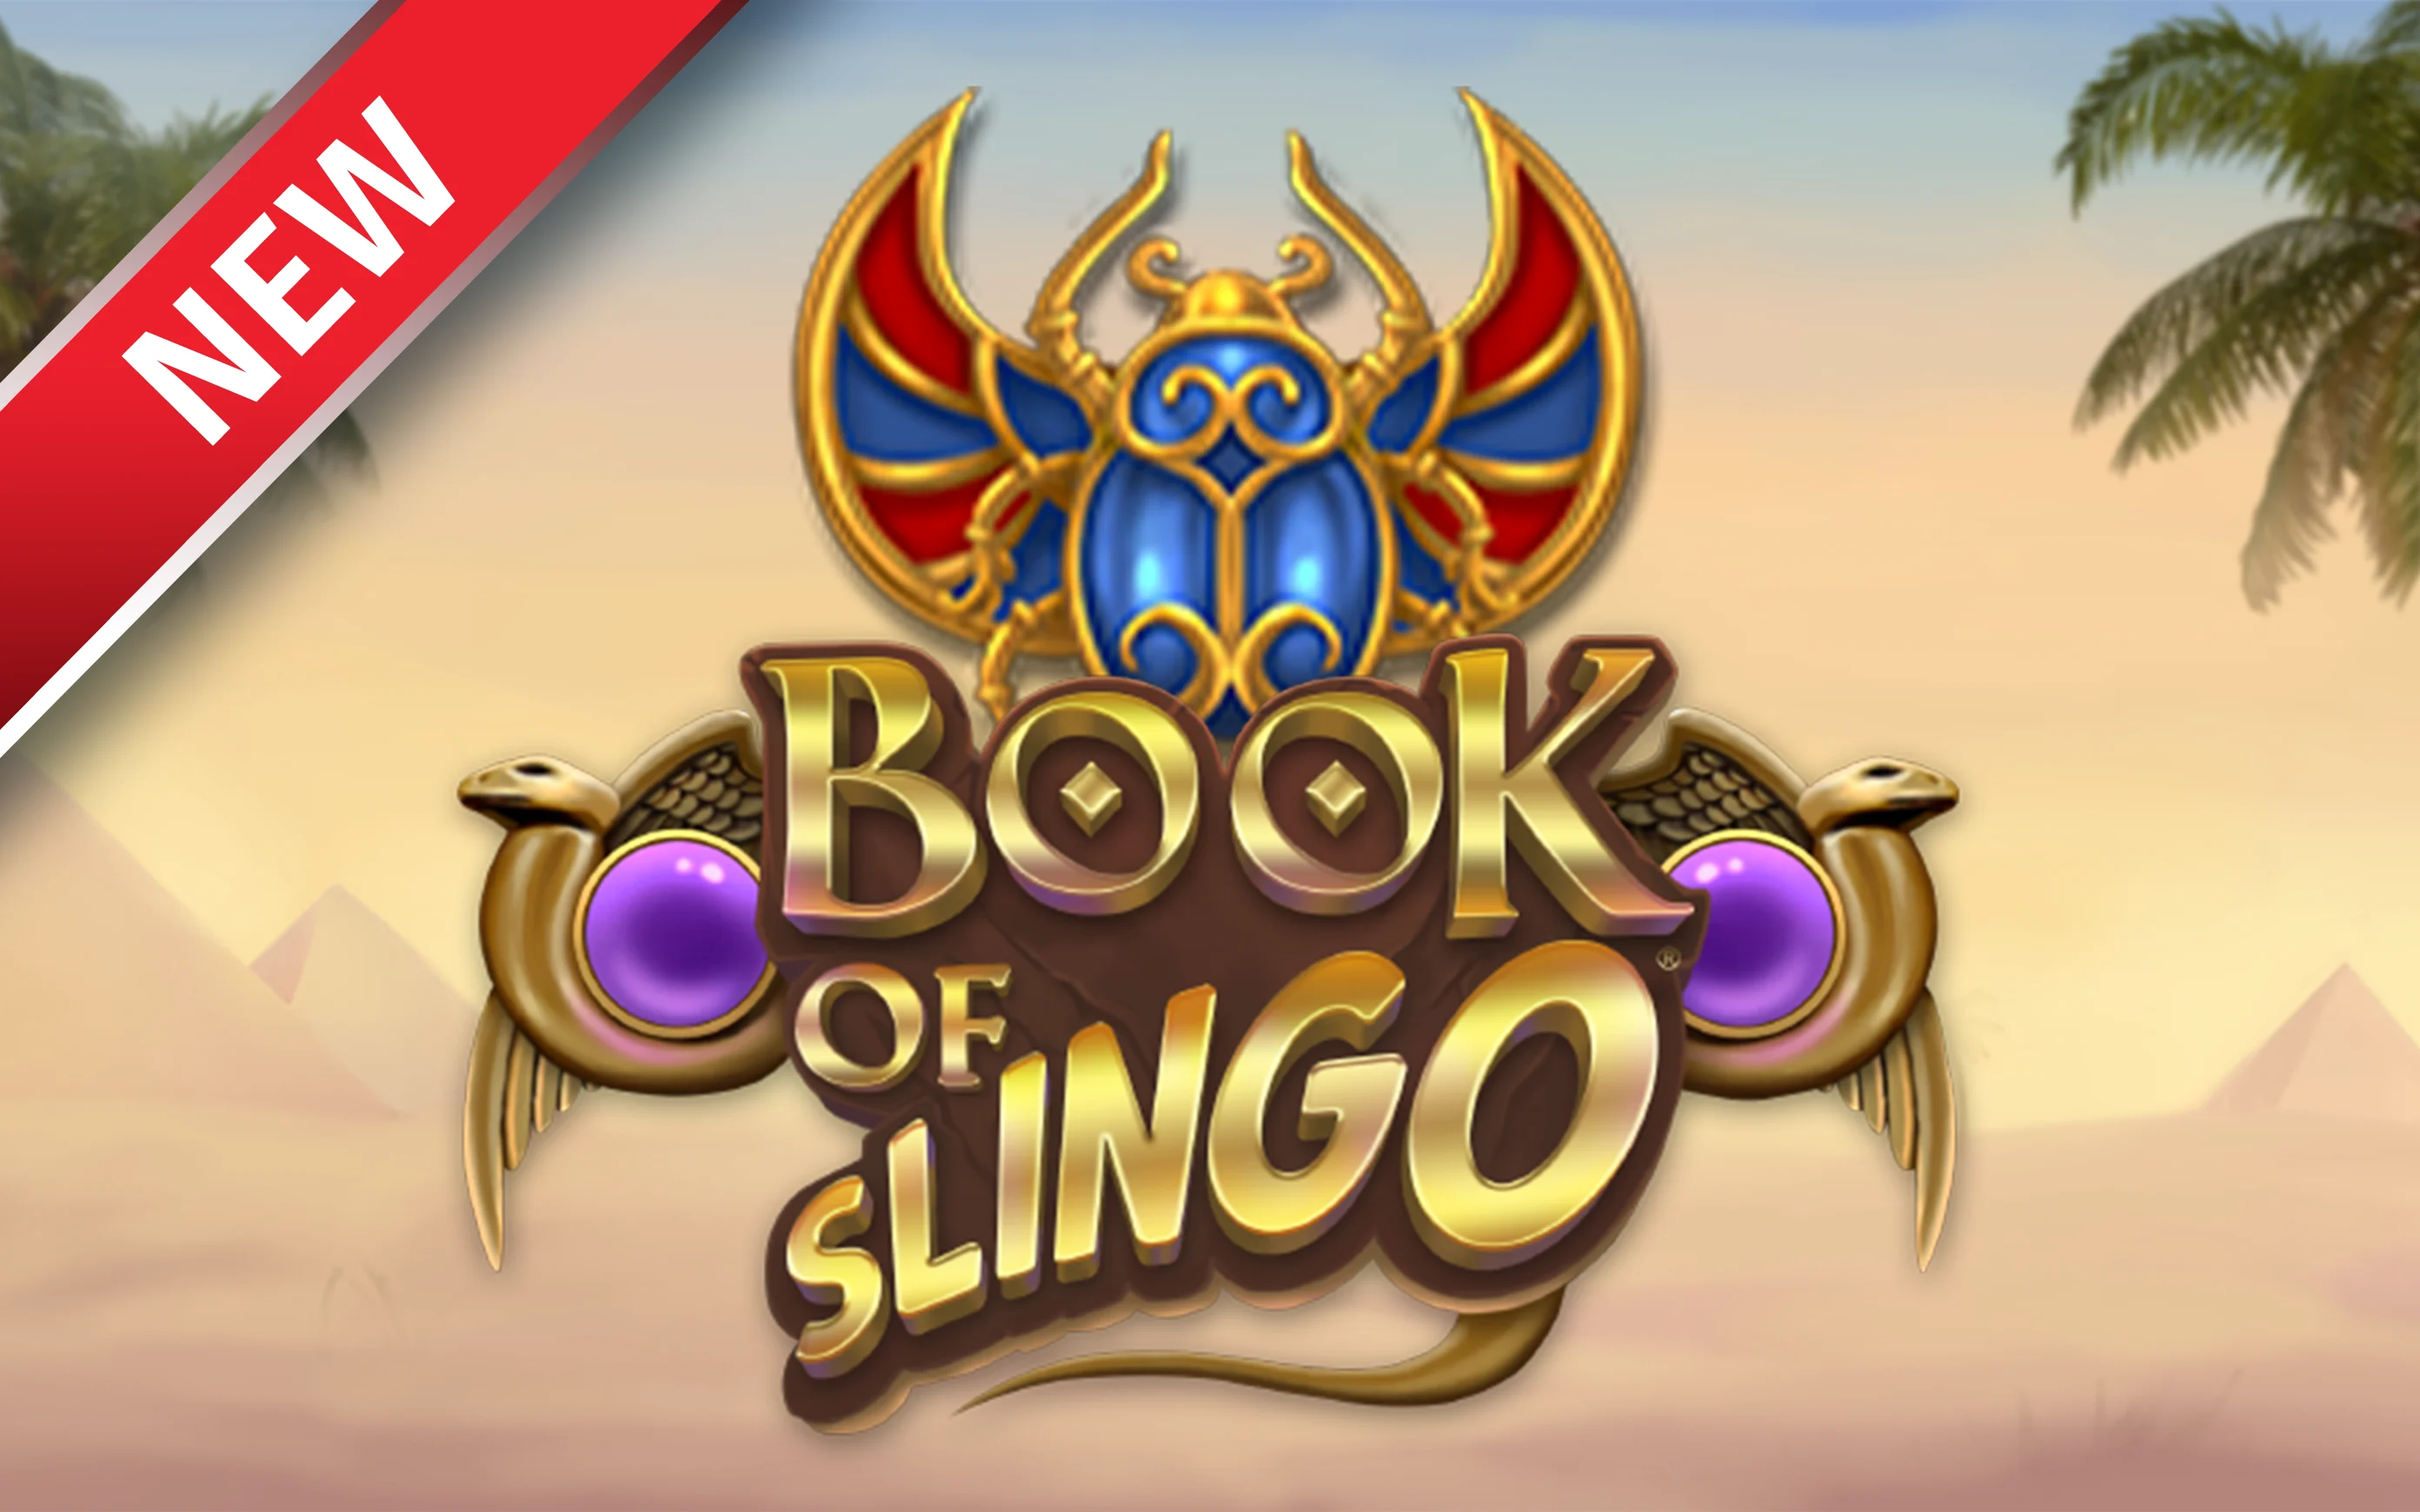 Play Book of Slingo on Starcasino.be online casino